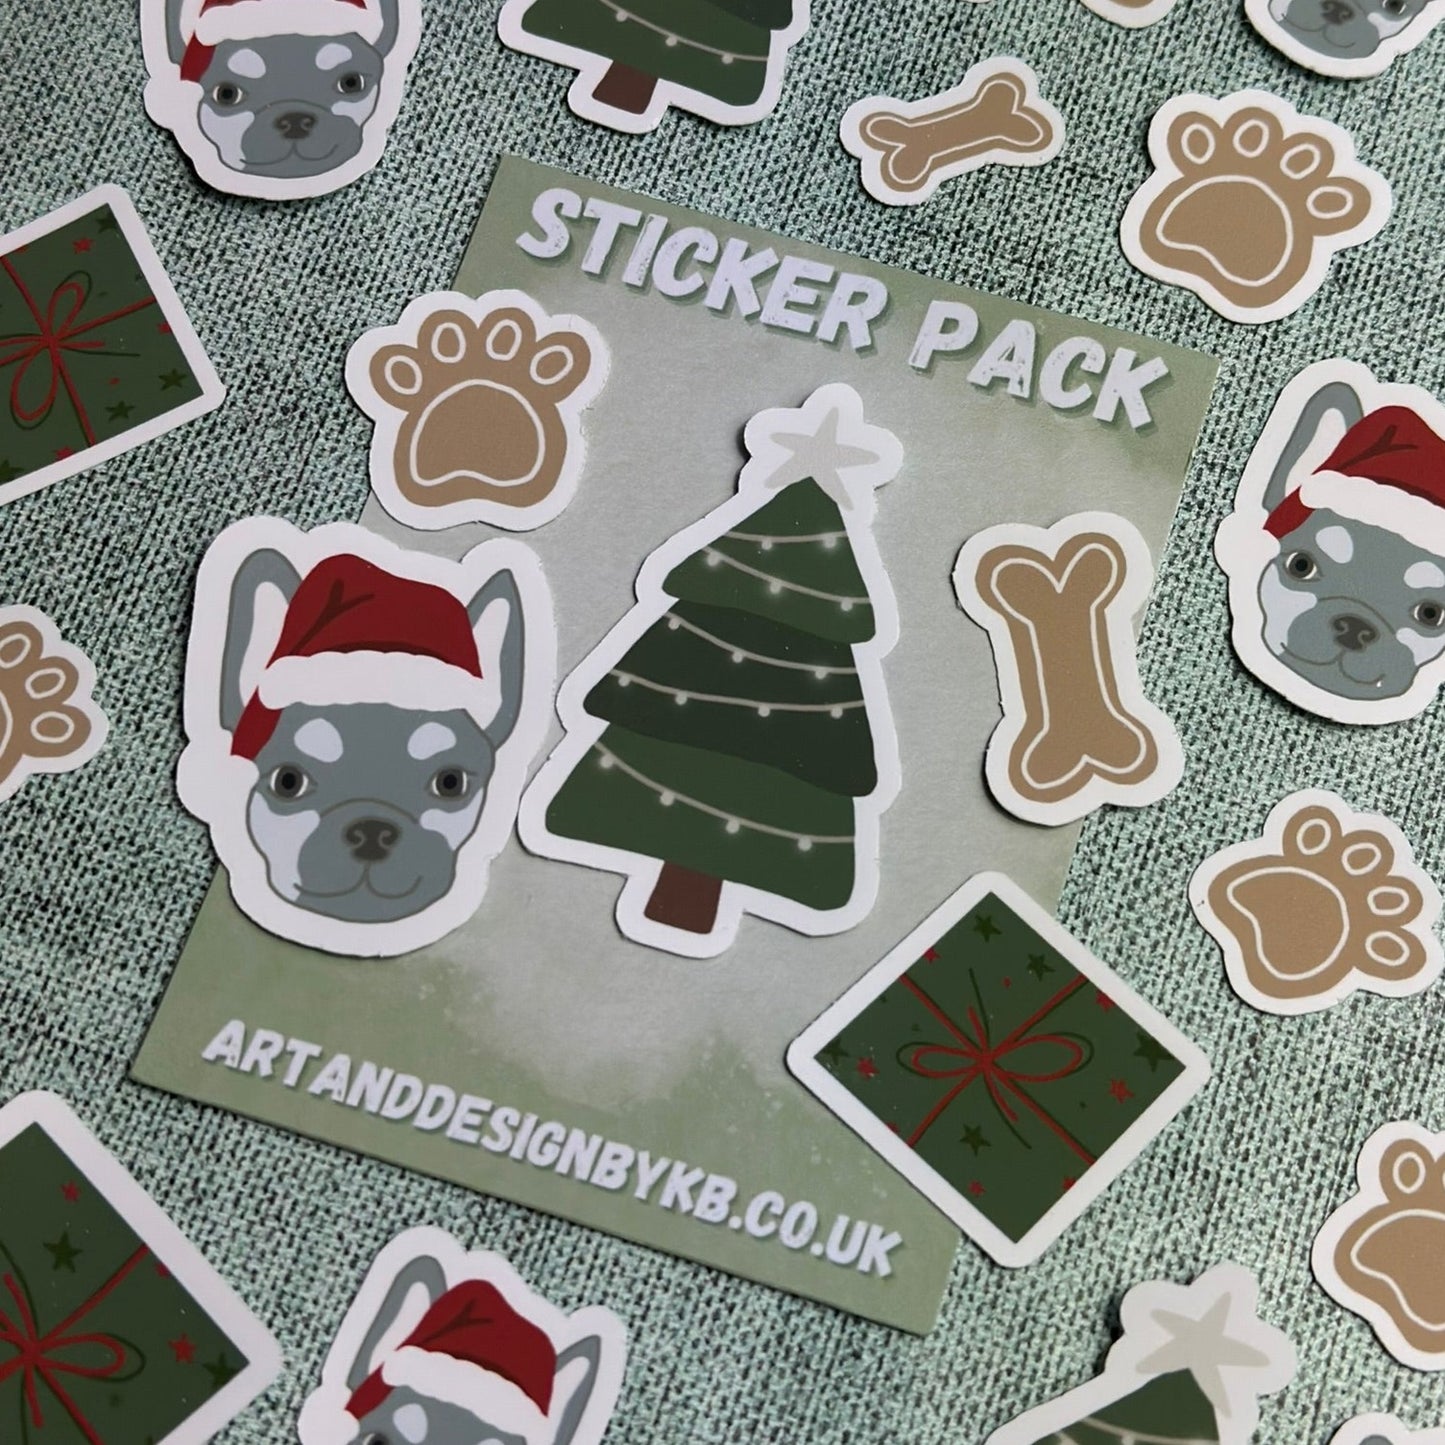 Festive French Bulldog Sticker Pack - Storm dog Christmas sticker pack